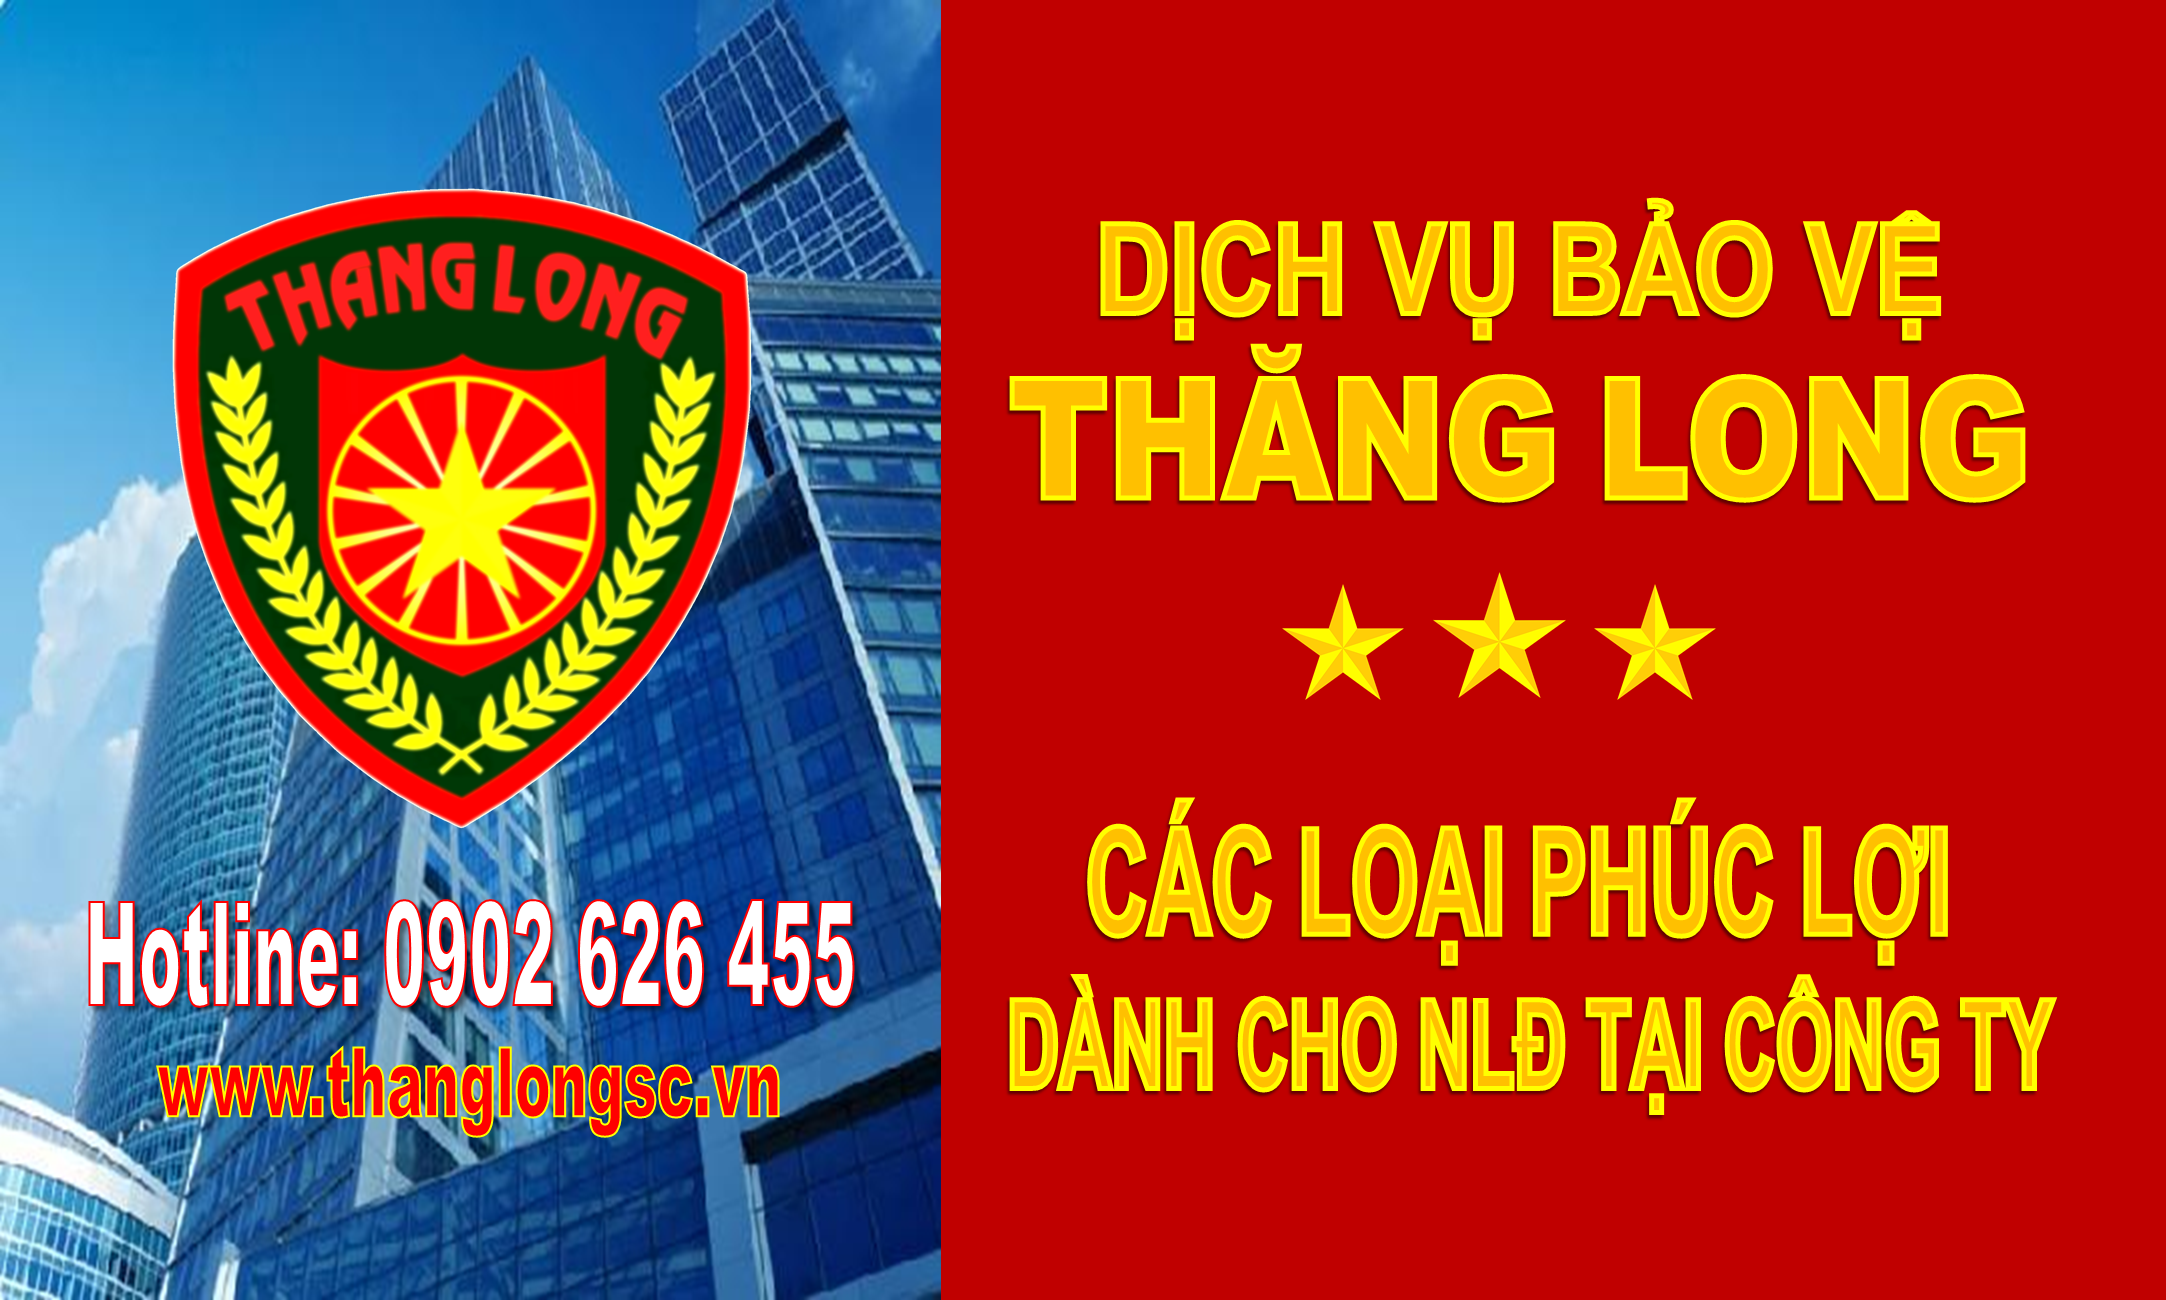 Phuc Loi